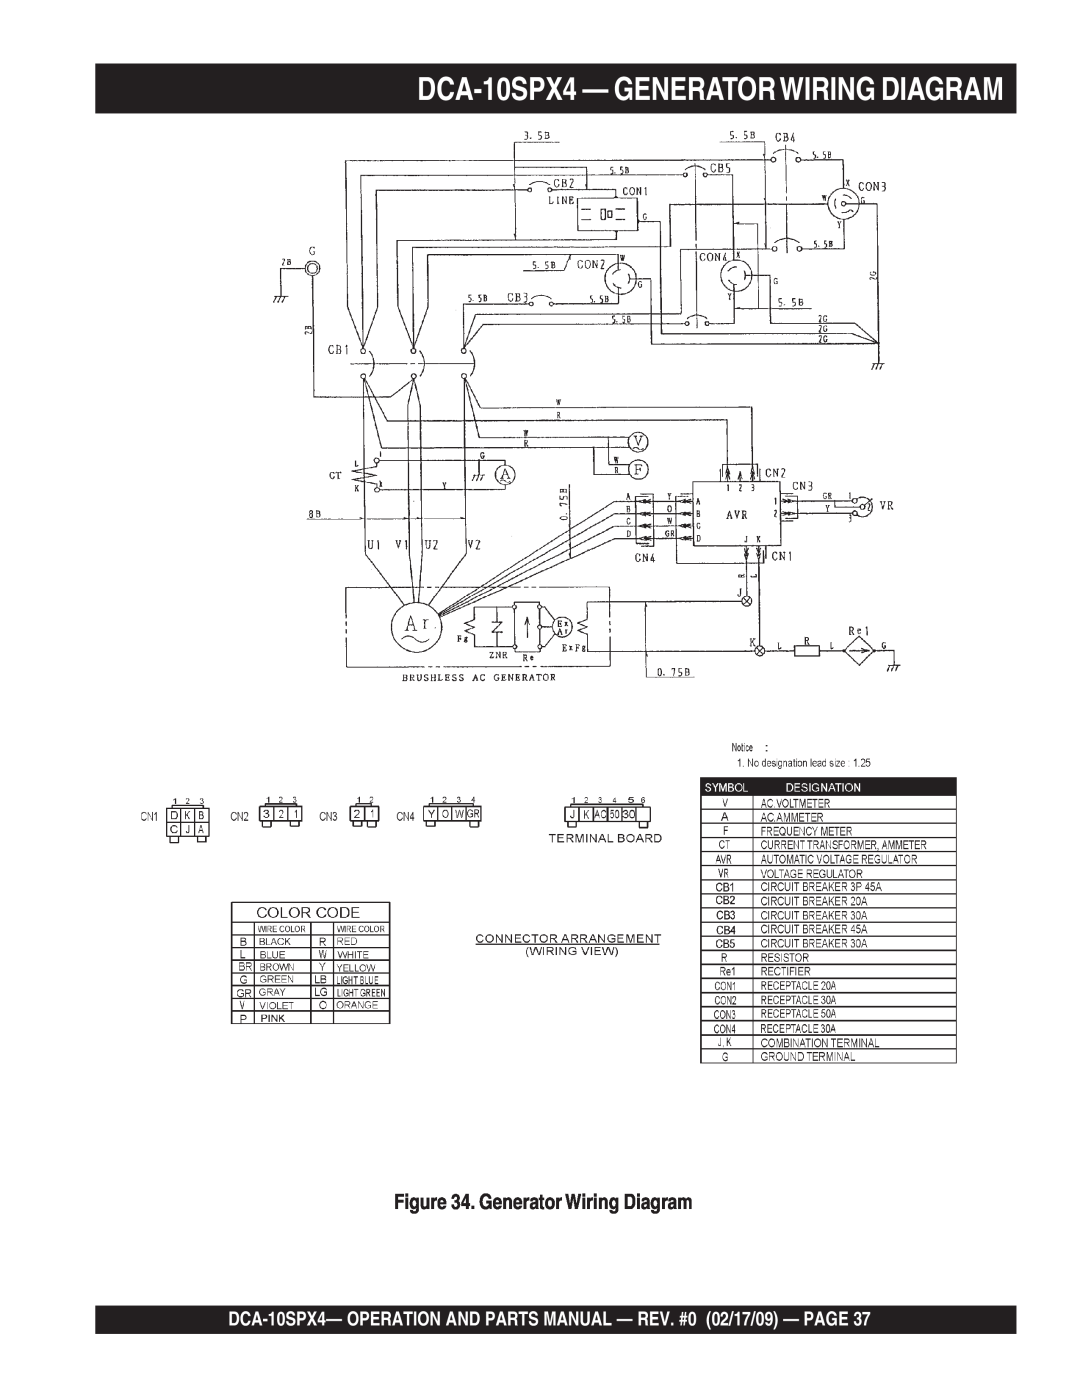 Multiquip operation manual DCA-10SPX4 - GENERATORWIRING DIAGRAM, Generator Wiring Diagram 